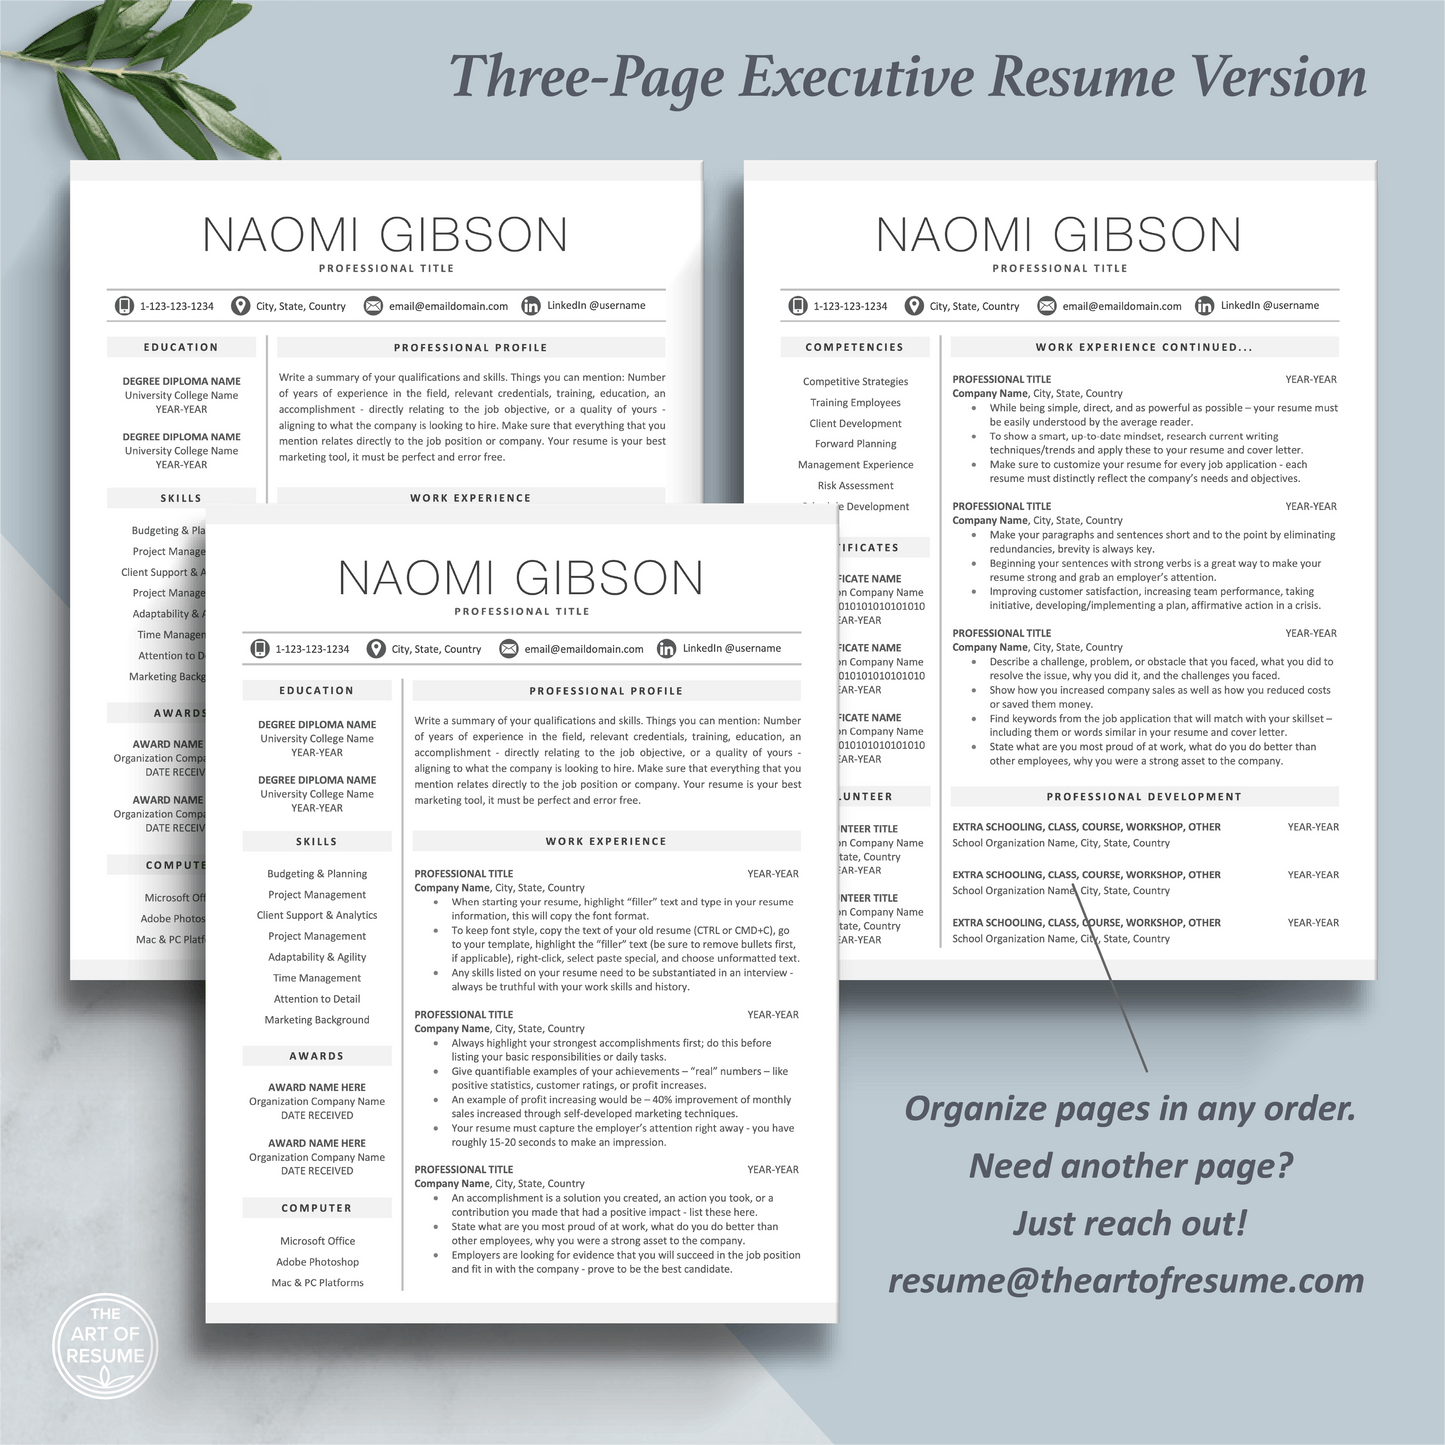 The Art of Resume Templates | Three-Page Professional Minimalist Simple Executive CEO C-Suite Level  Resume CV Template Format | Curriculum Vitae